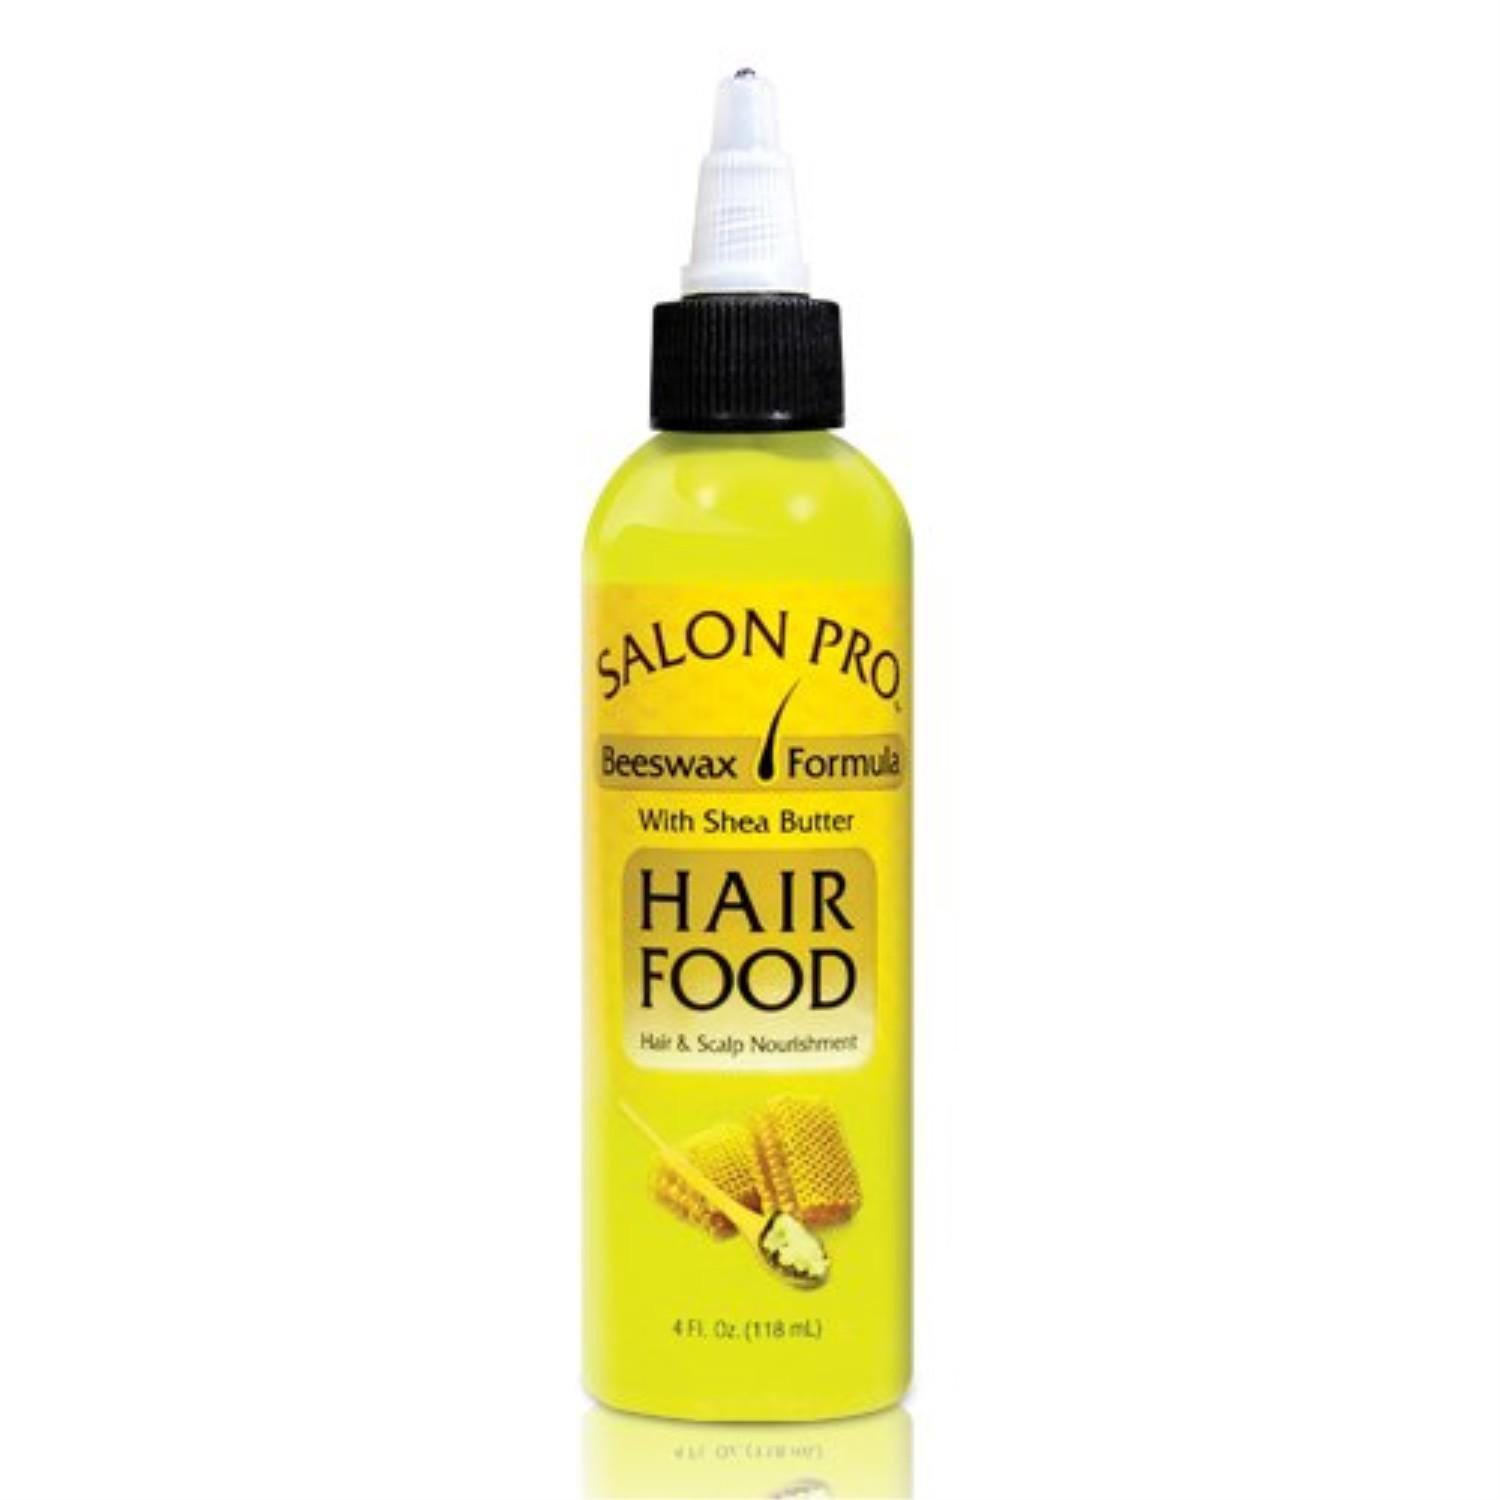 Salon Pro Hair Food Beeswax W/Shea Butter 4oz.